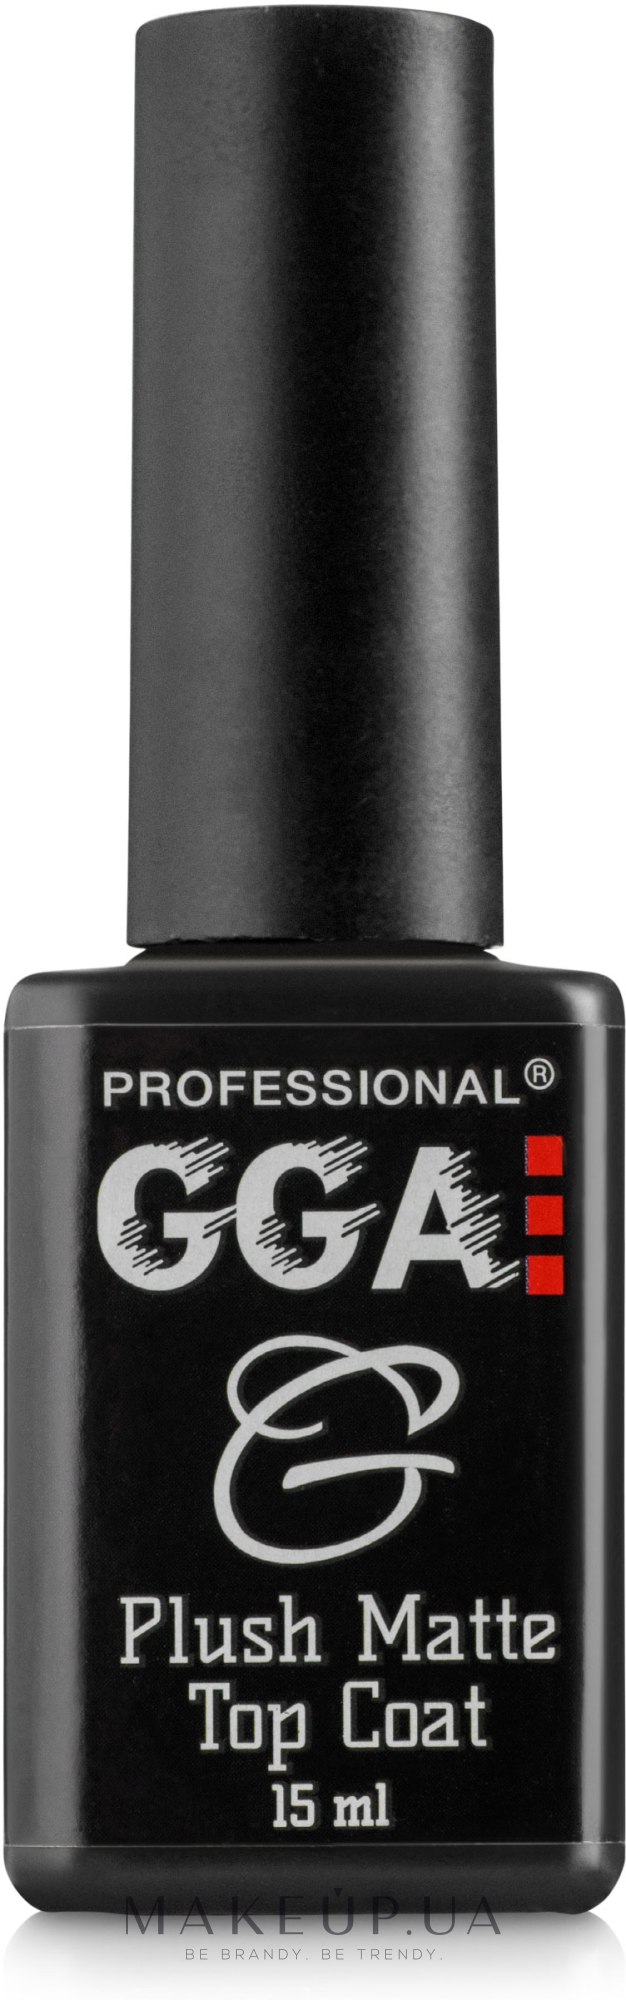 Матовий топ для гель-лаку - GGA Professional Plush Matte Top Coat — фото 15ml